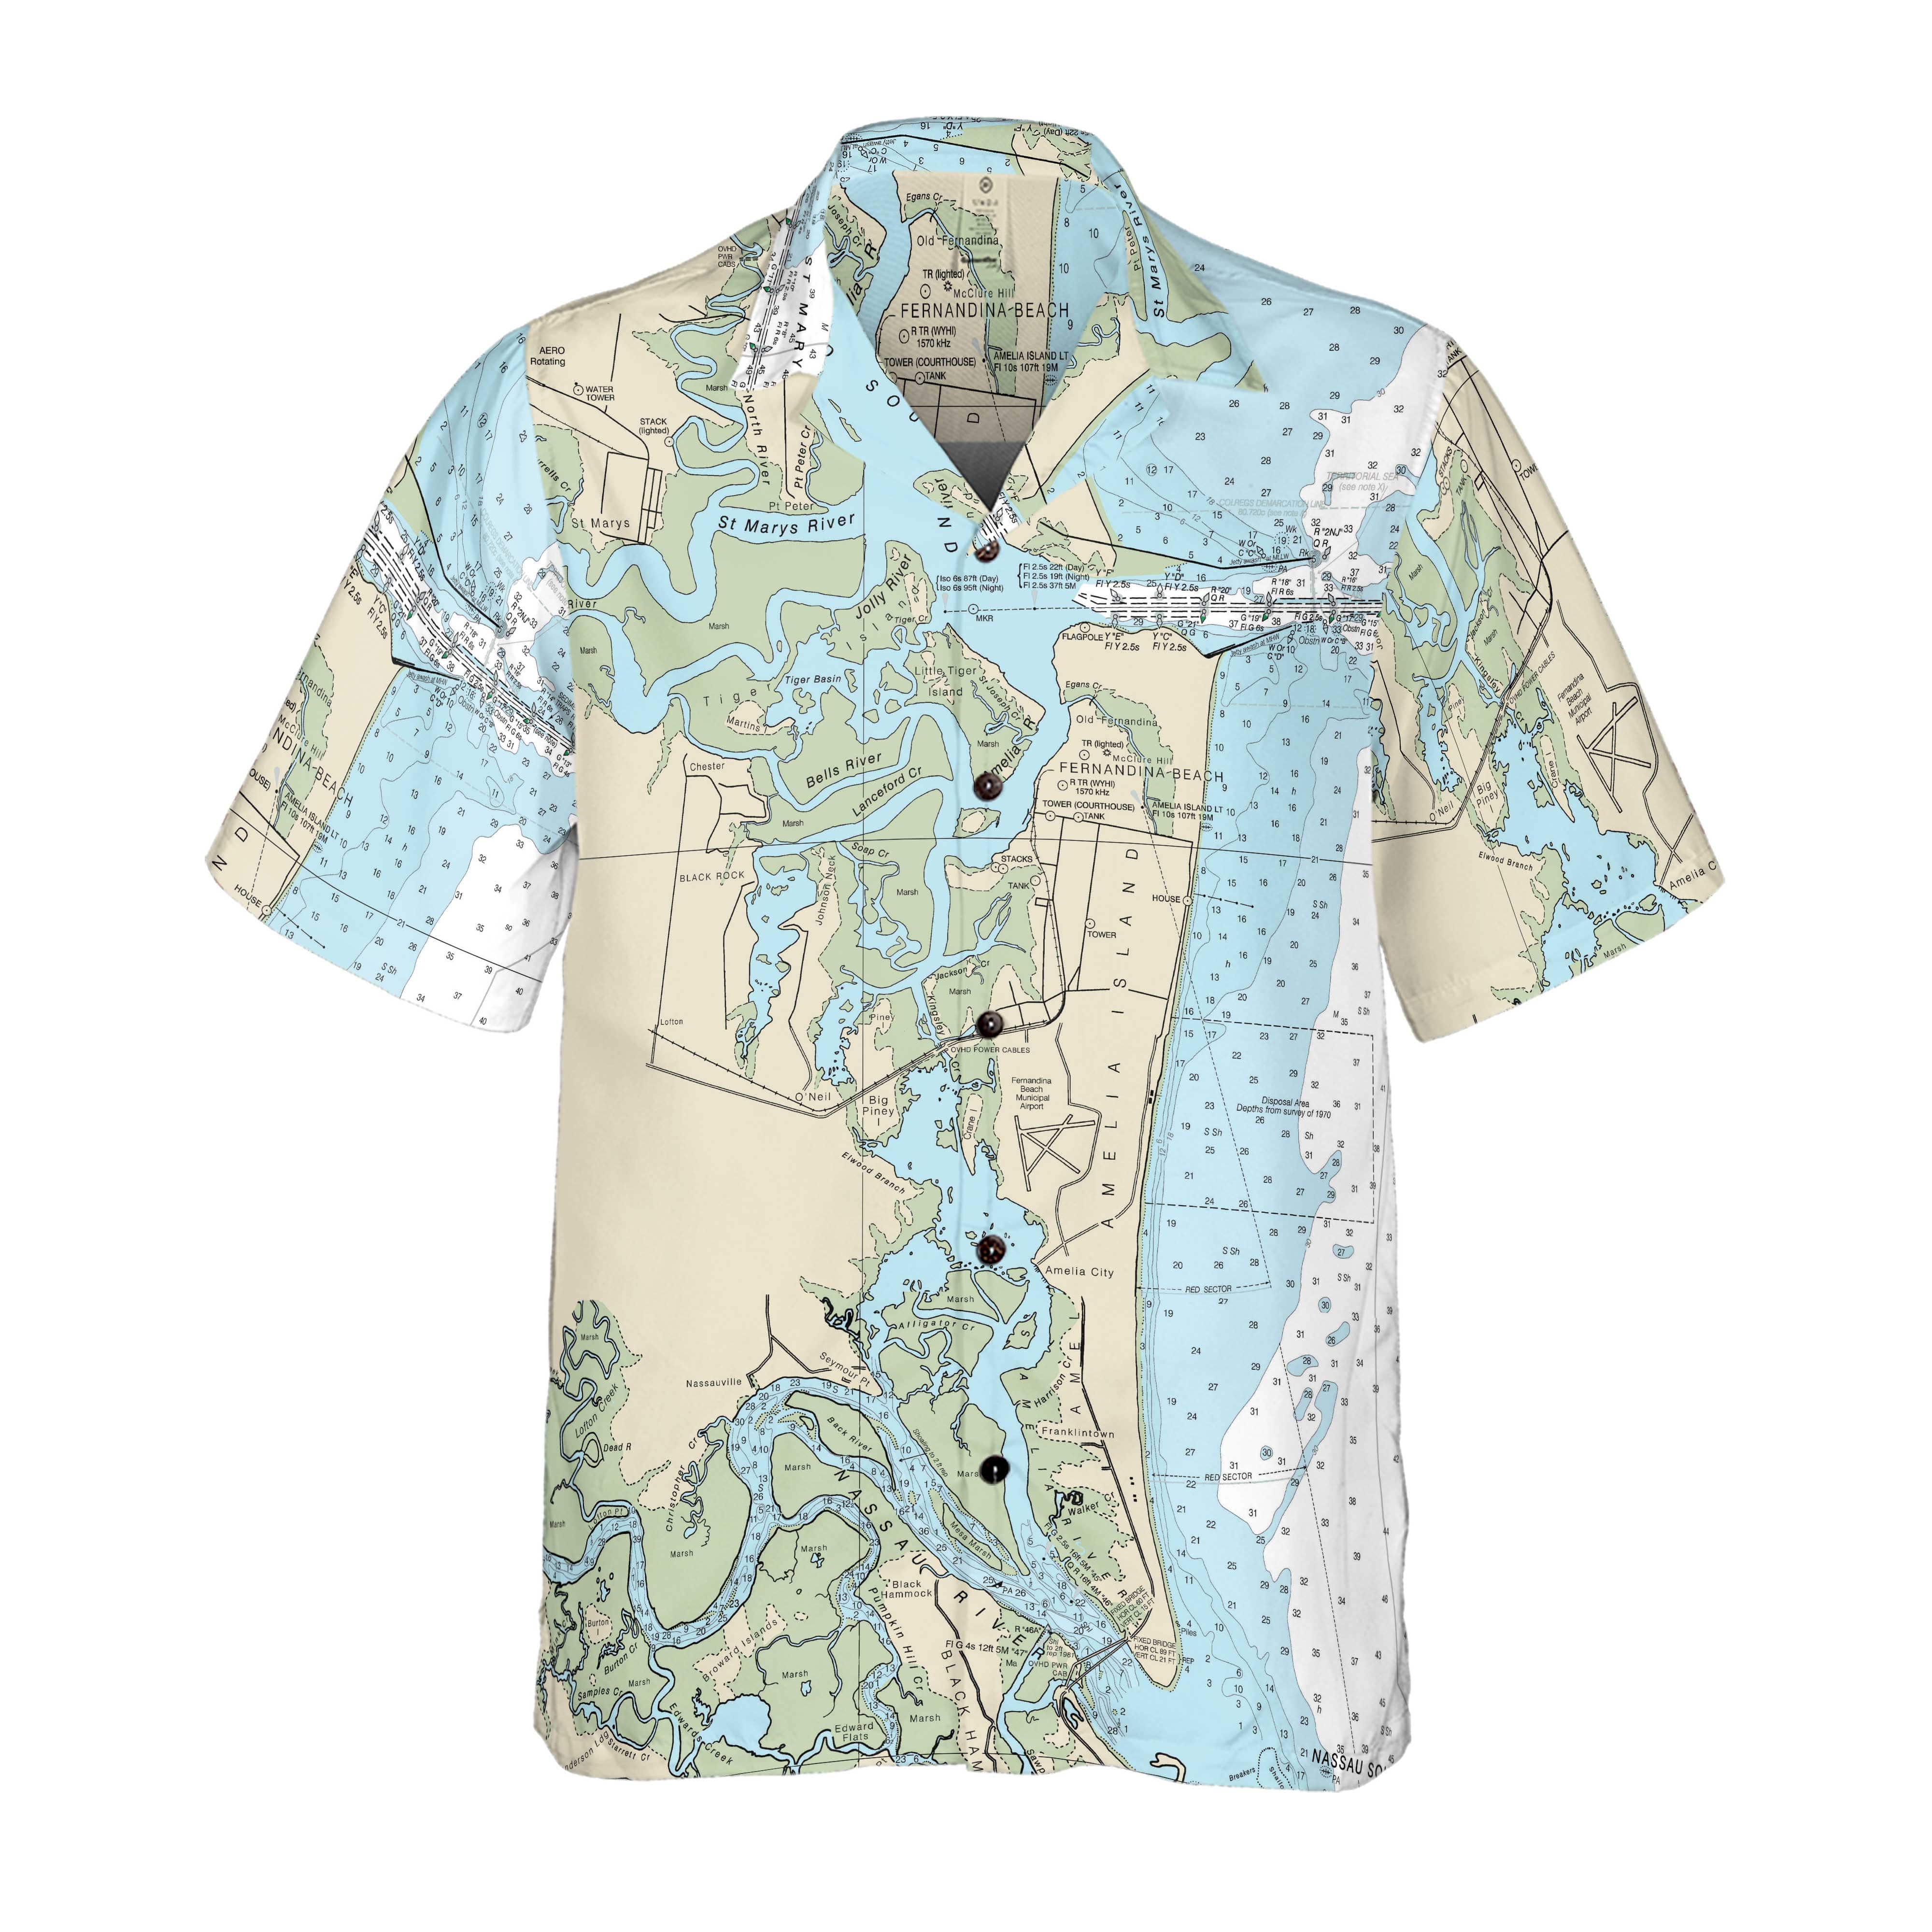 The Amelia Island and Fernandina Beach Coconut Button Camp Shirt